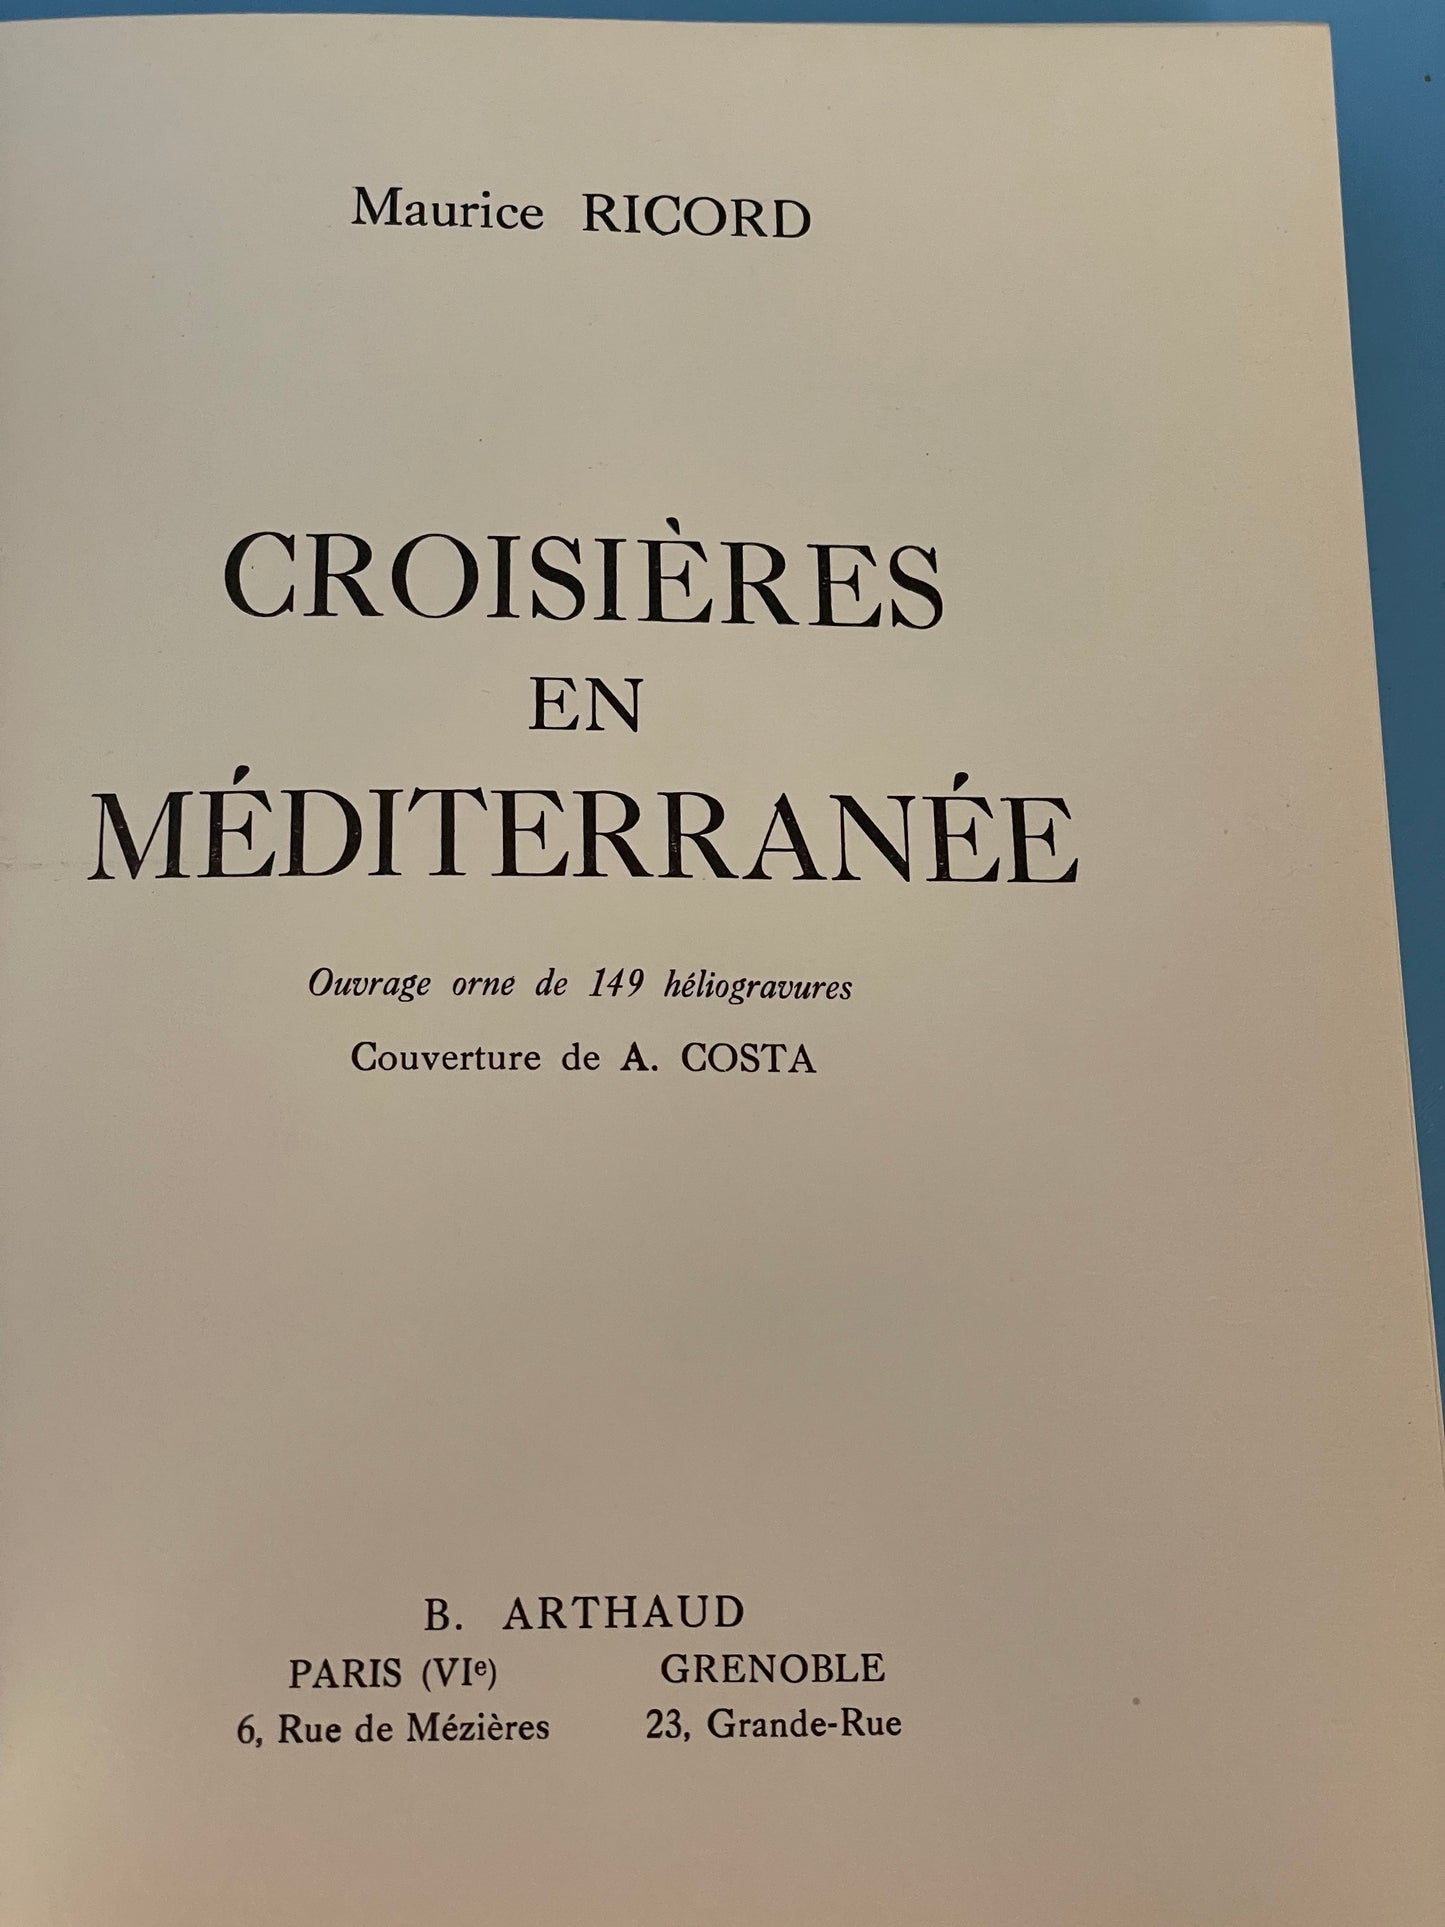 Croisière en Méditerranée .. édition Arthaud, Maurice Ricord 1953